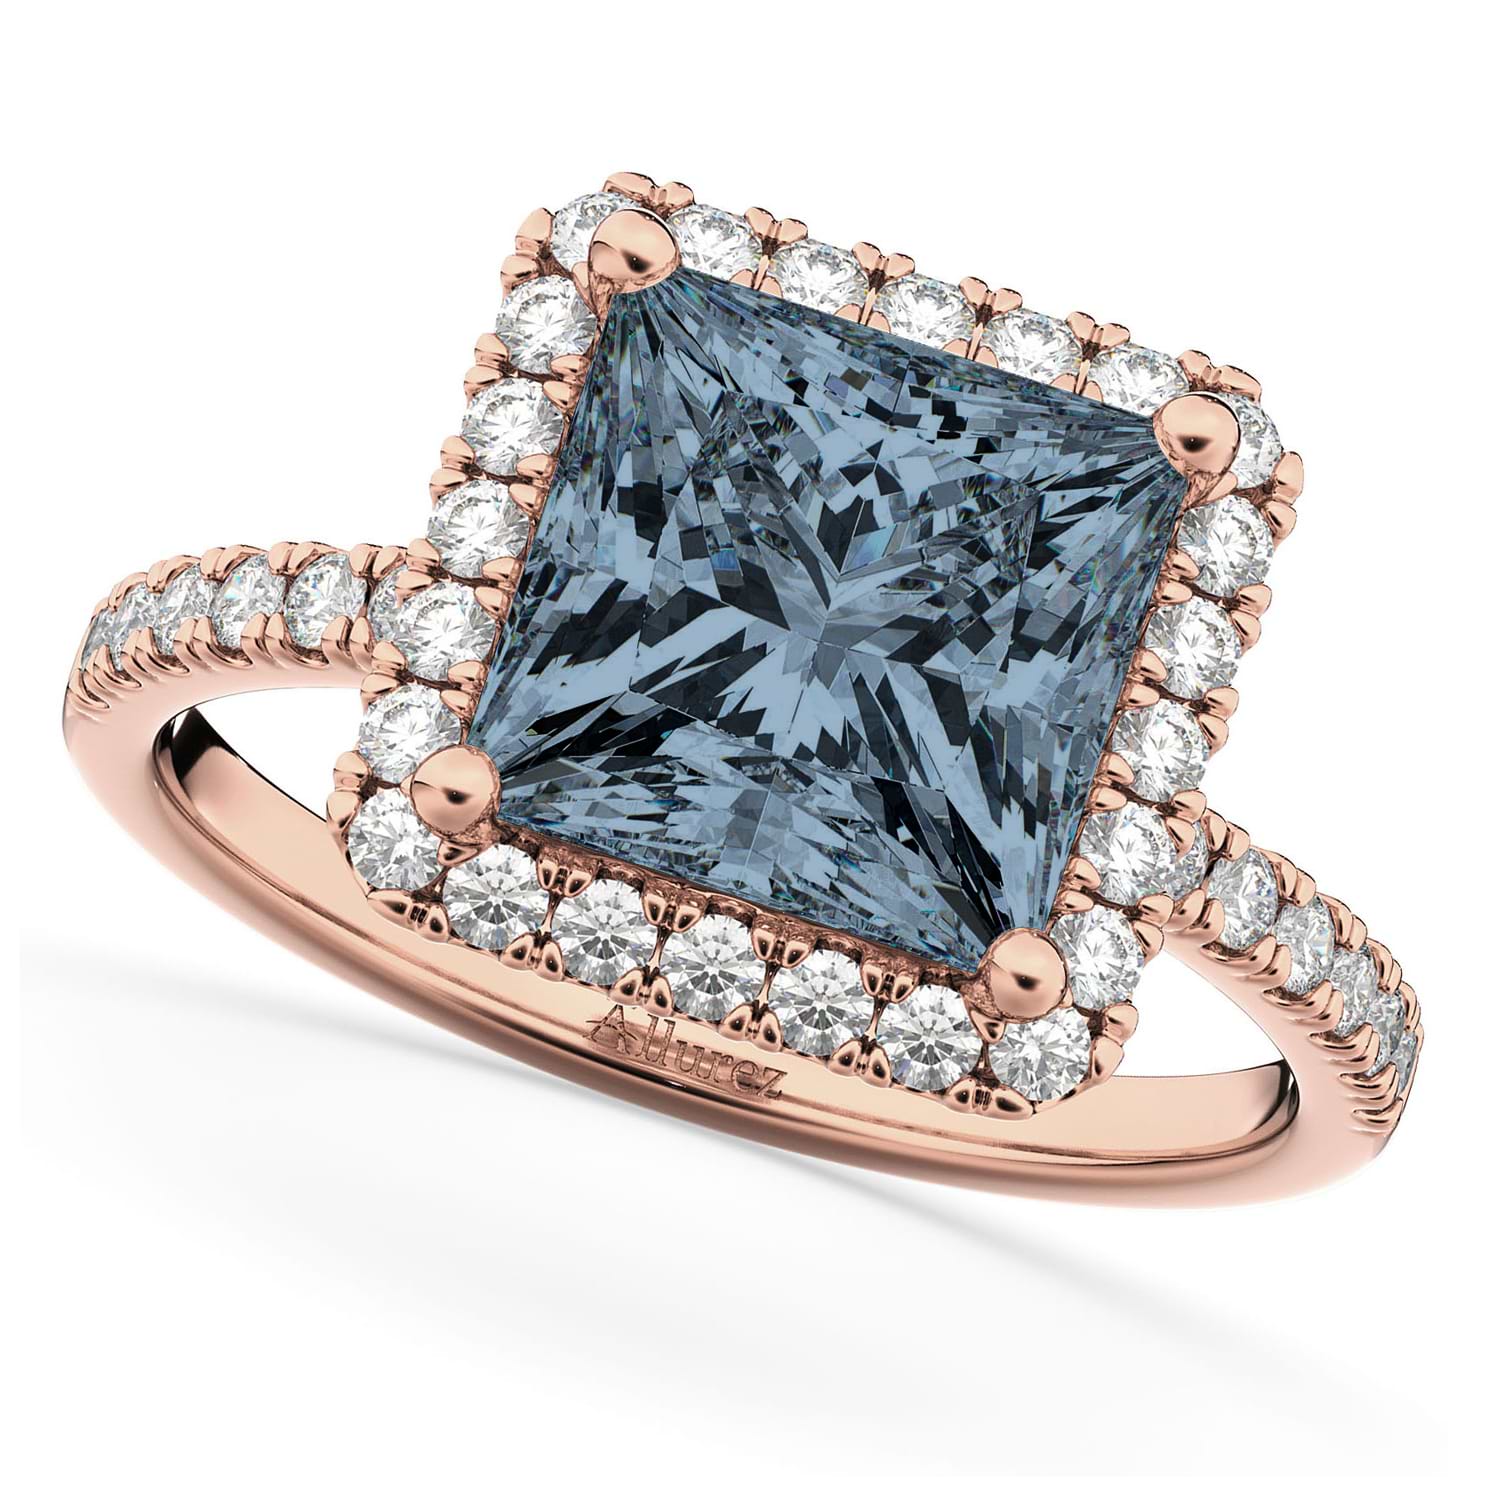 Princess Cut Halo Gray Spinel & Diamond Engagement Ring 14K Rose Gold 3.47ct